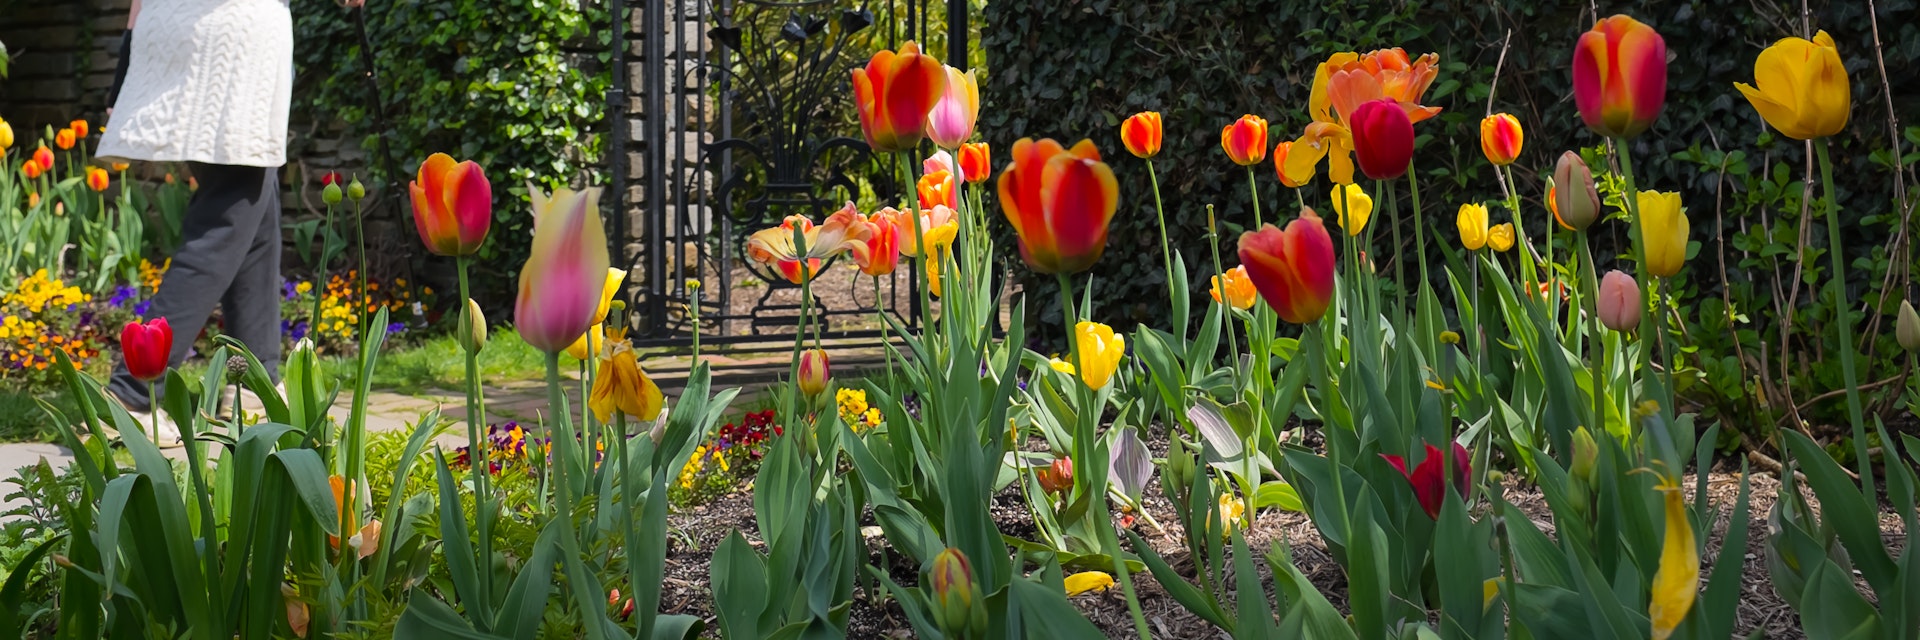 Tulips at Dumbarton Oaks in Georgetown, Washington DC, USA.